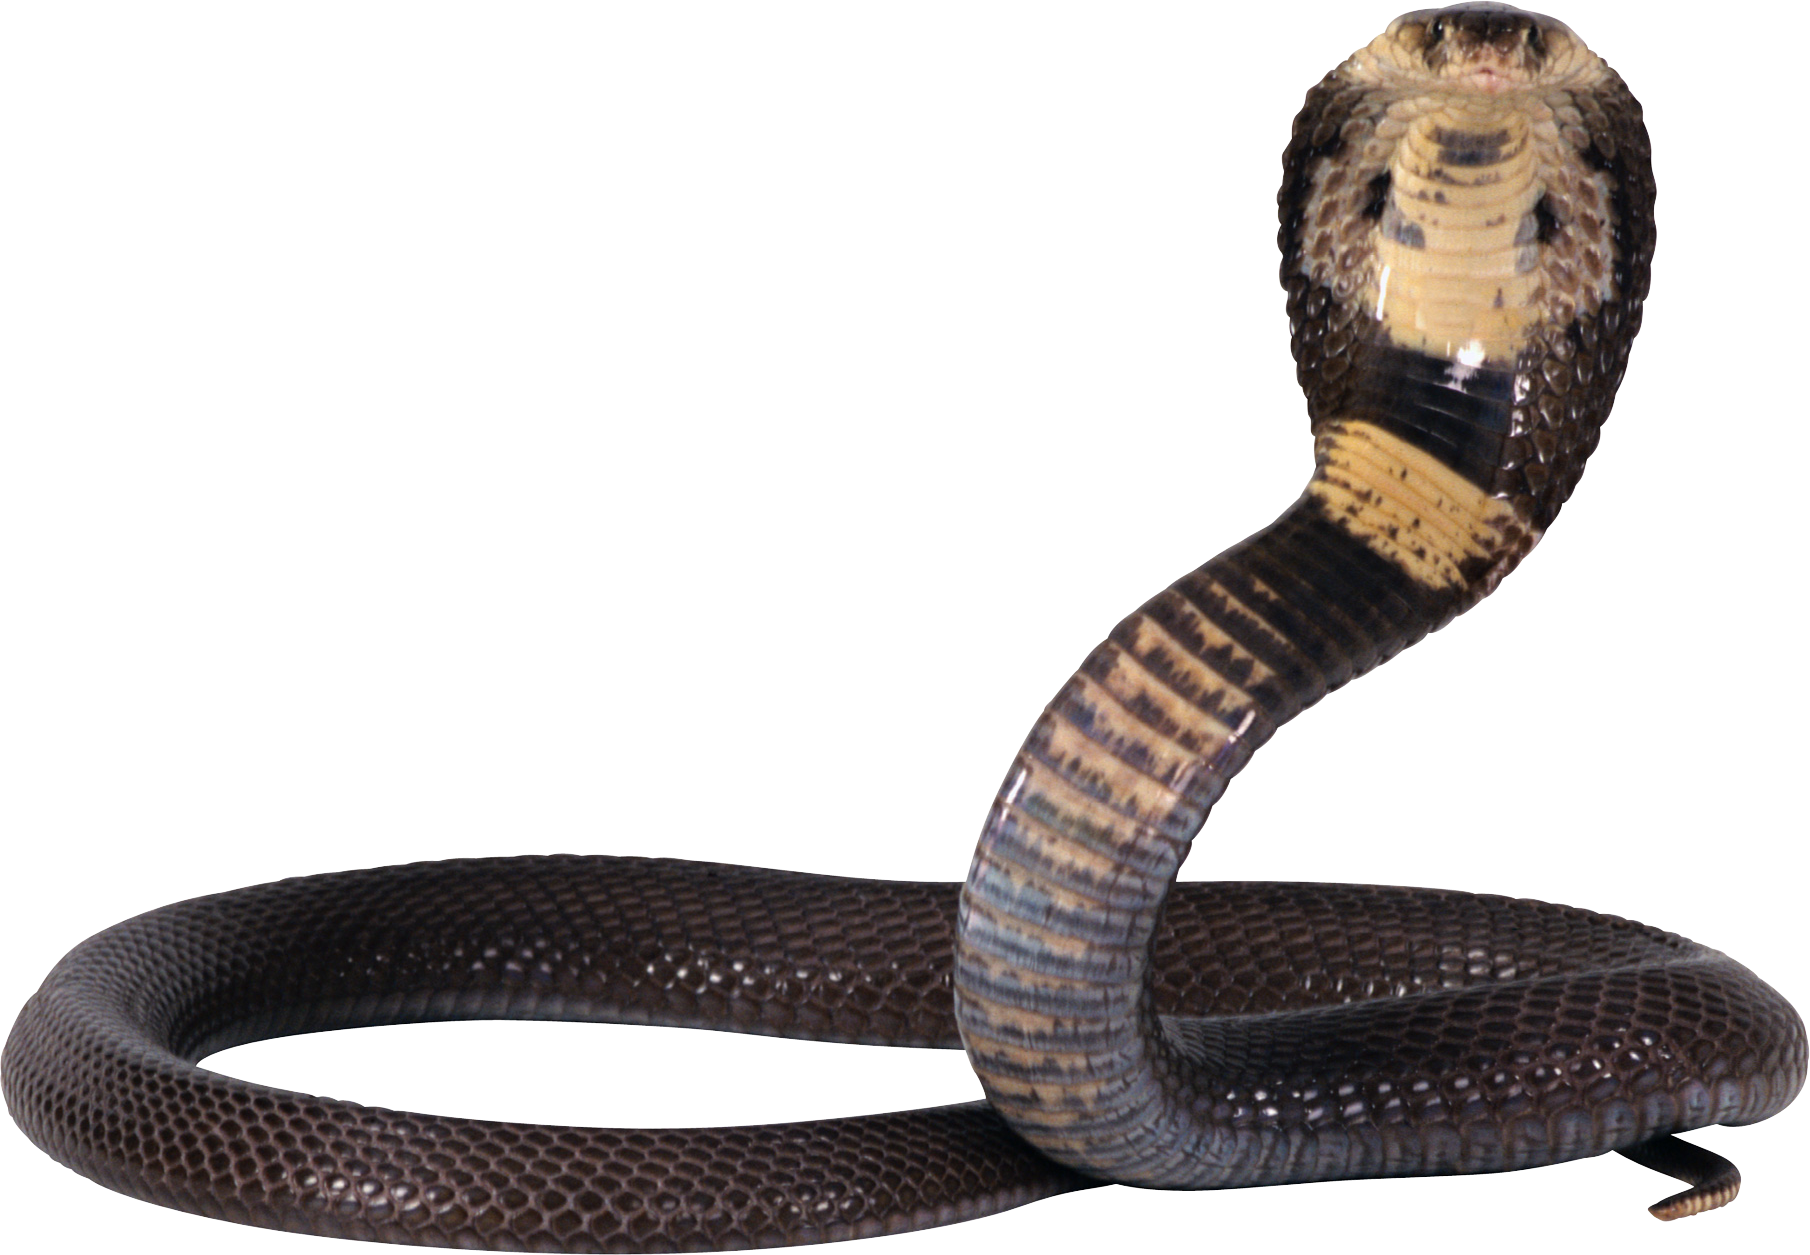 Cobra Snake Png Image, Free Download Picture   Snake Png - Snake, Transparent background PNG HD thumbnail